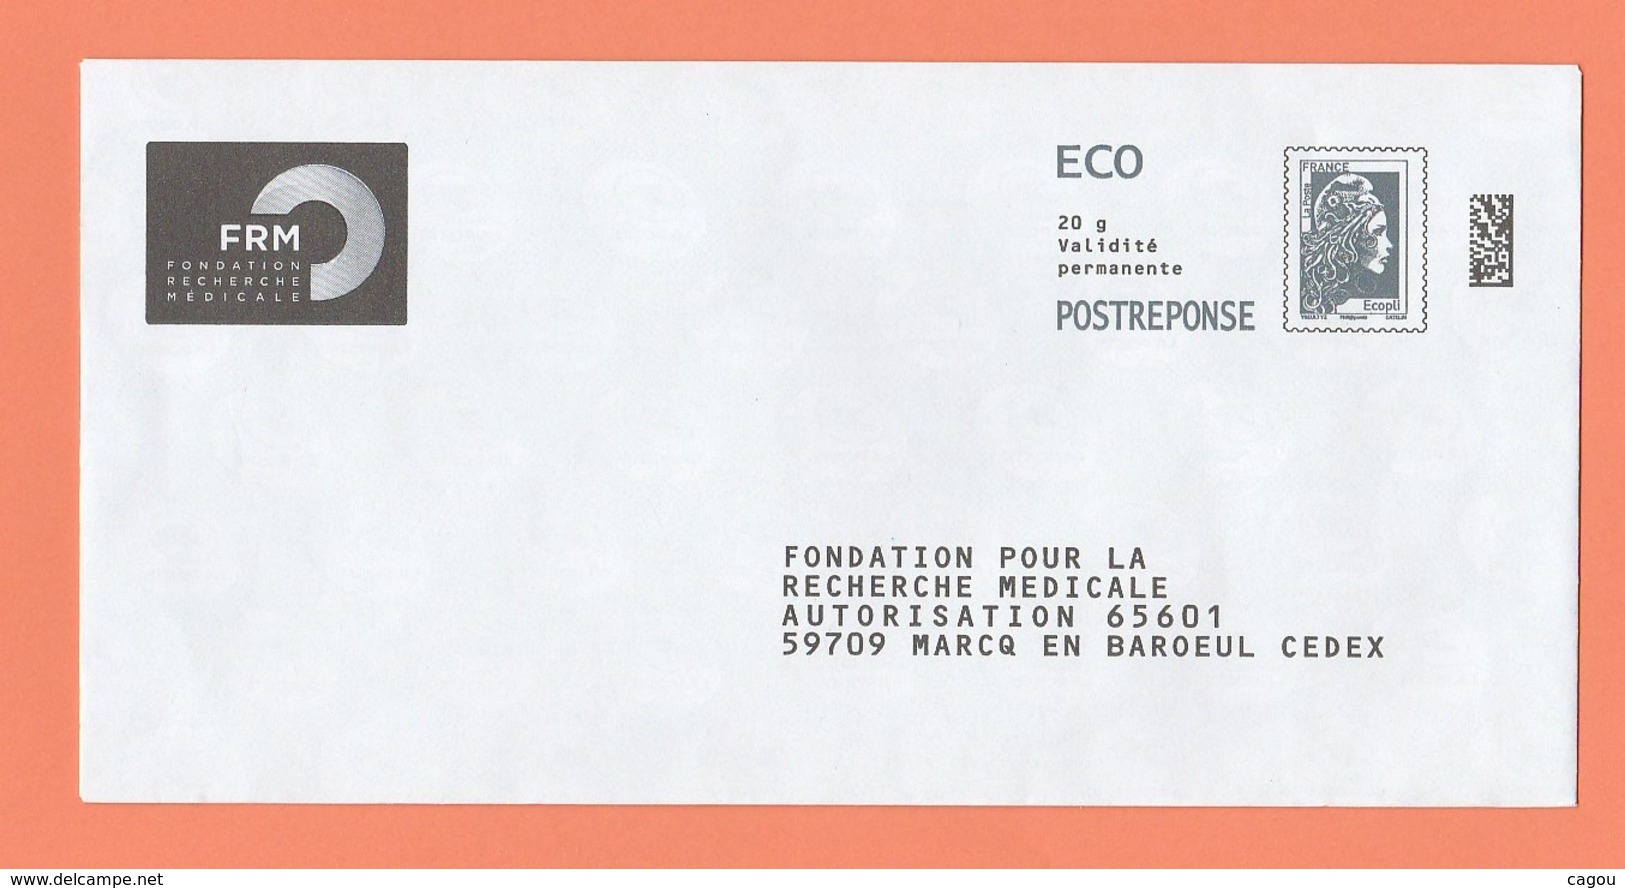 PRET A POSTER FRM FONDATION RECHERCHE MEDICALE  ECO POSTREPONSE 20g VALIDITE PERMANENTE MARIANNE L'ENGAGEE - Prêts-à-poster:reply